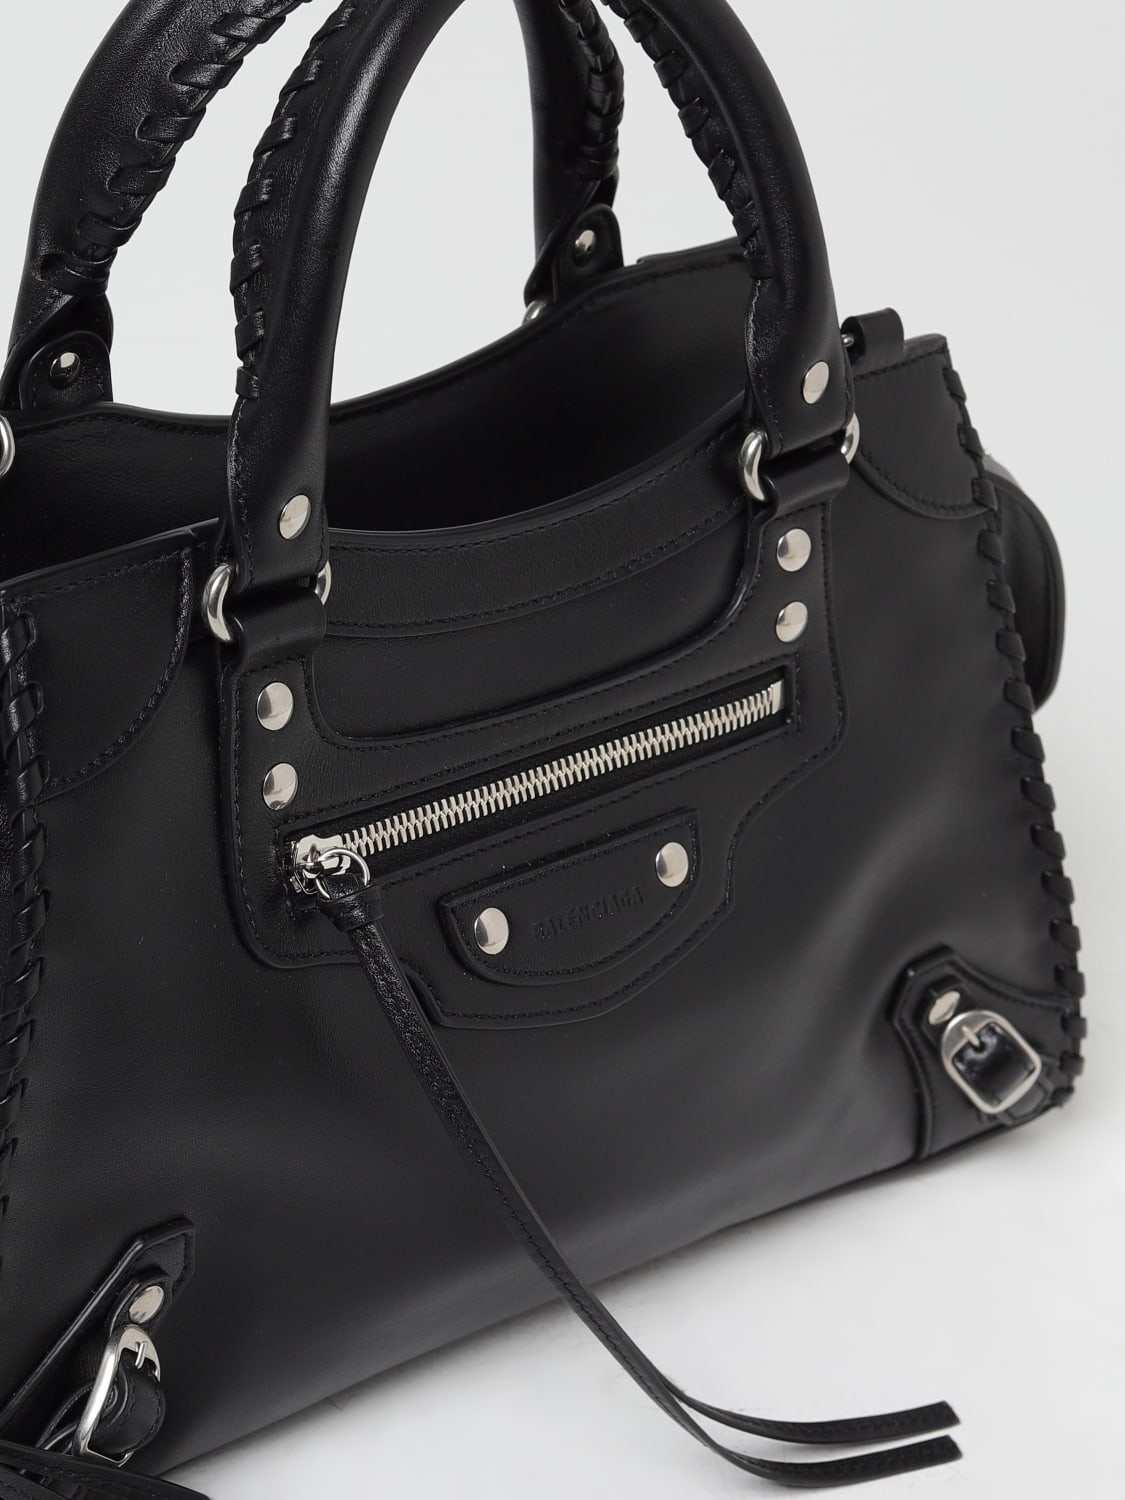 Balenciaga all black, classic Metallic Edge City Bag